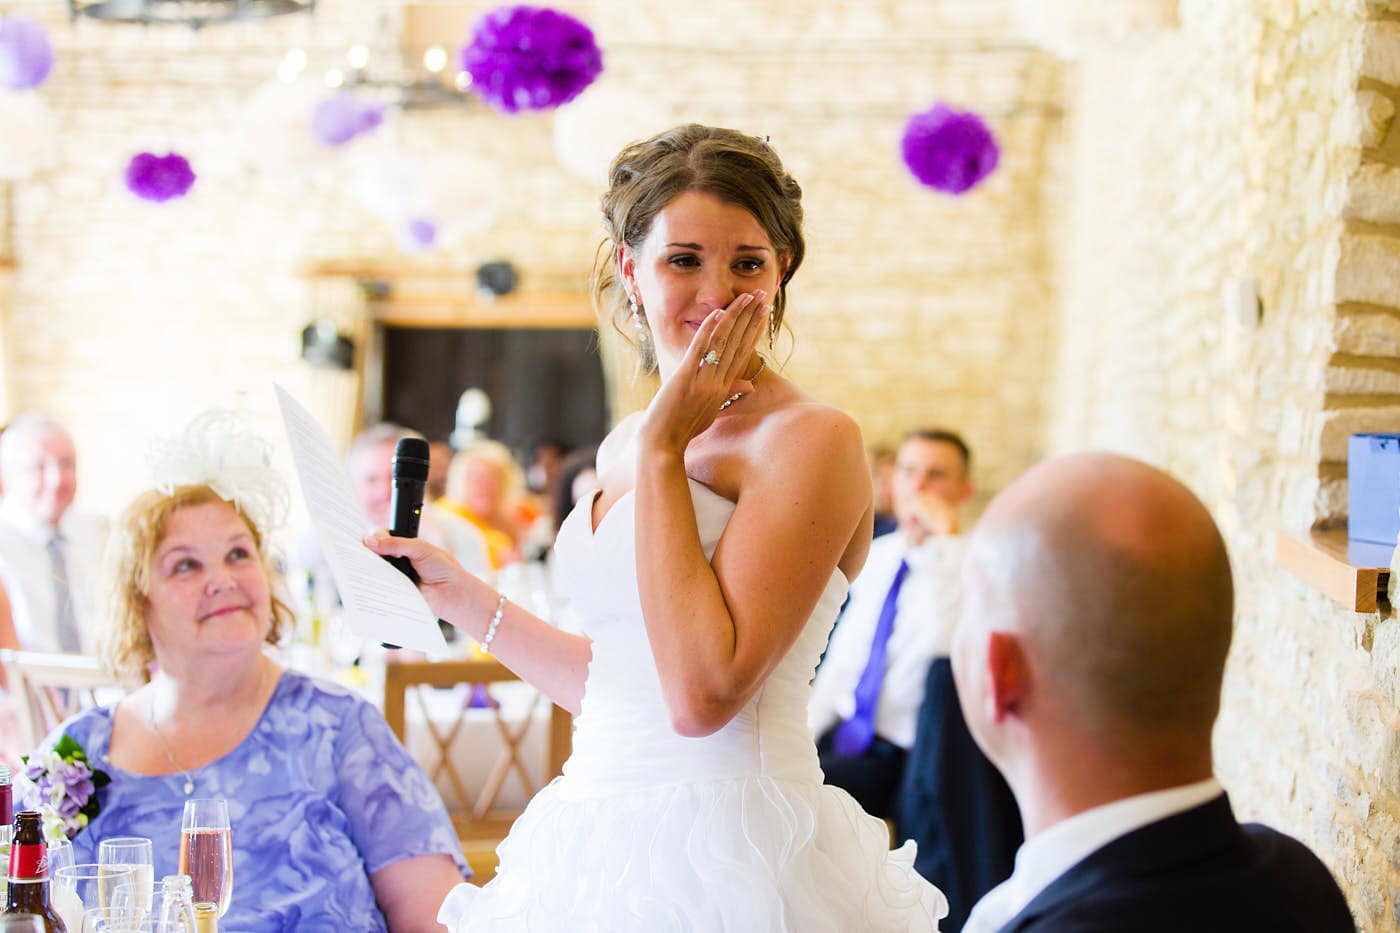 Emotional bride during her bridal wedding speech